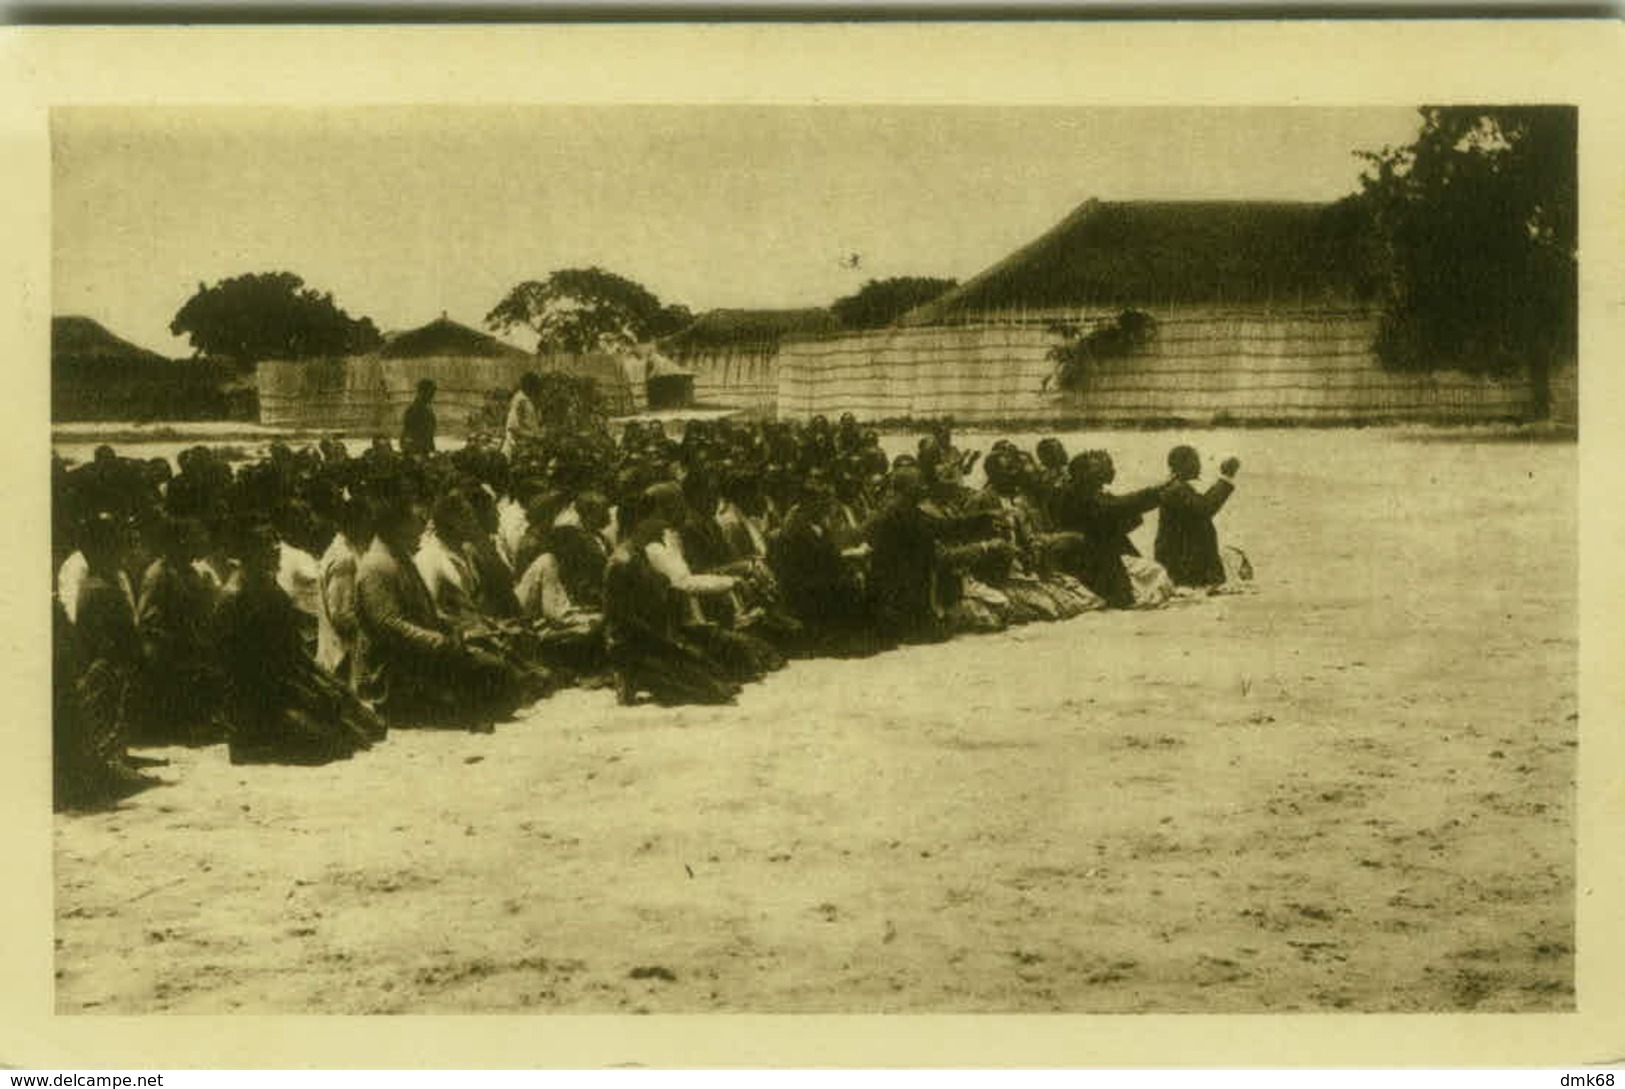 AFRICA - ZAMBIA - LEALUYI - LES CHEFS ET LE NGAMBELA SALUT LA REINE MOKWAE - 1930s (5535) - Zambia